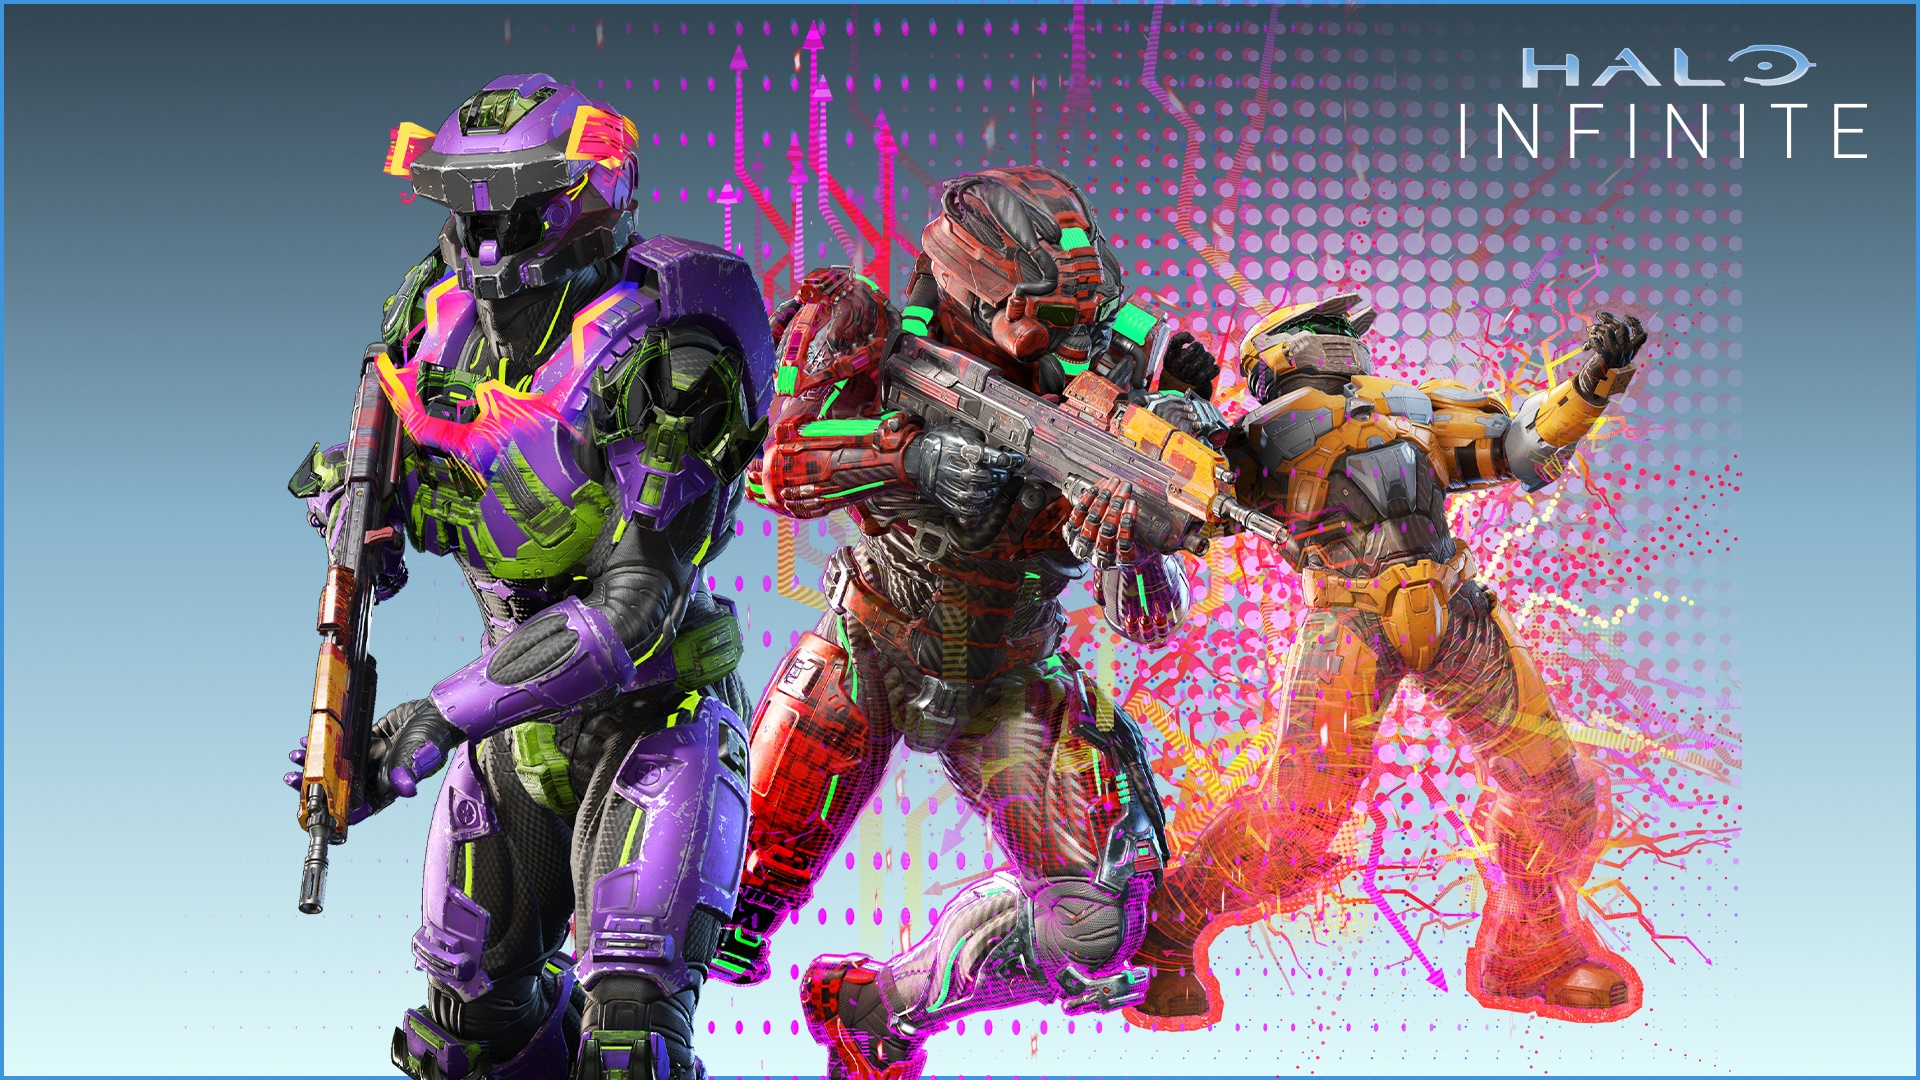 Halo Infinite image of the Net Riot bundle